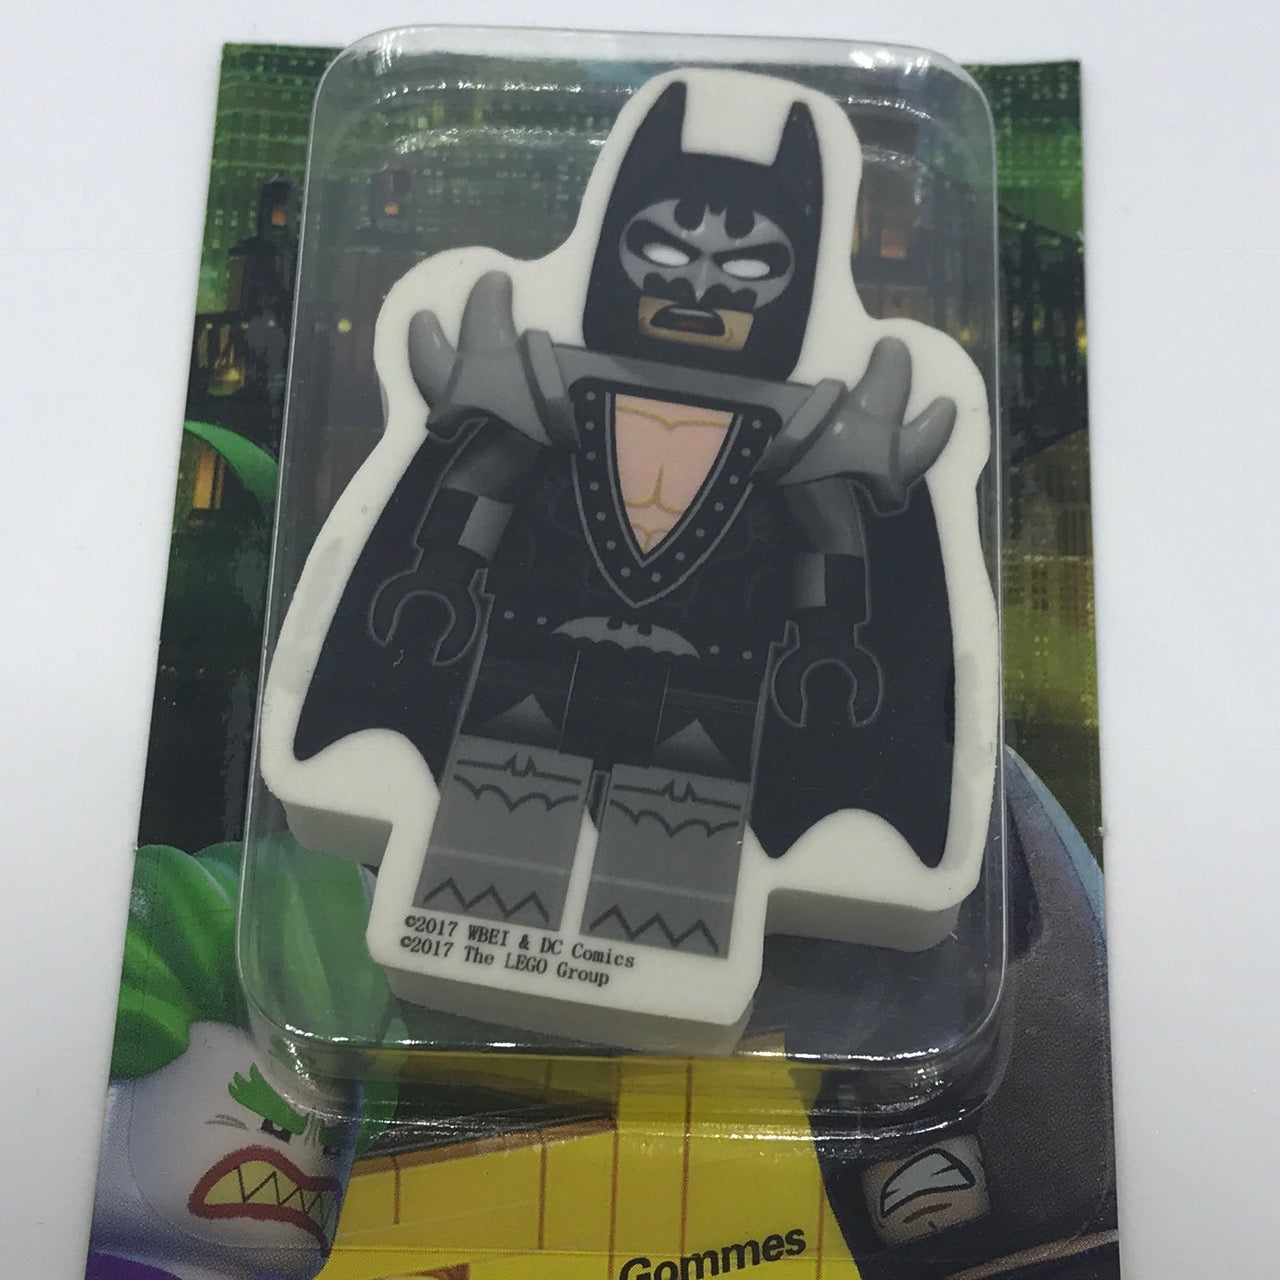 Lego Batman Eraser - 4 kinds